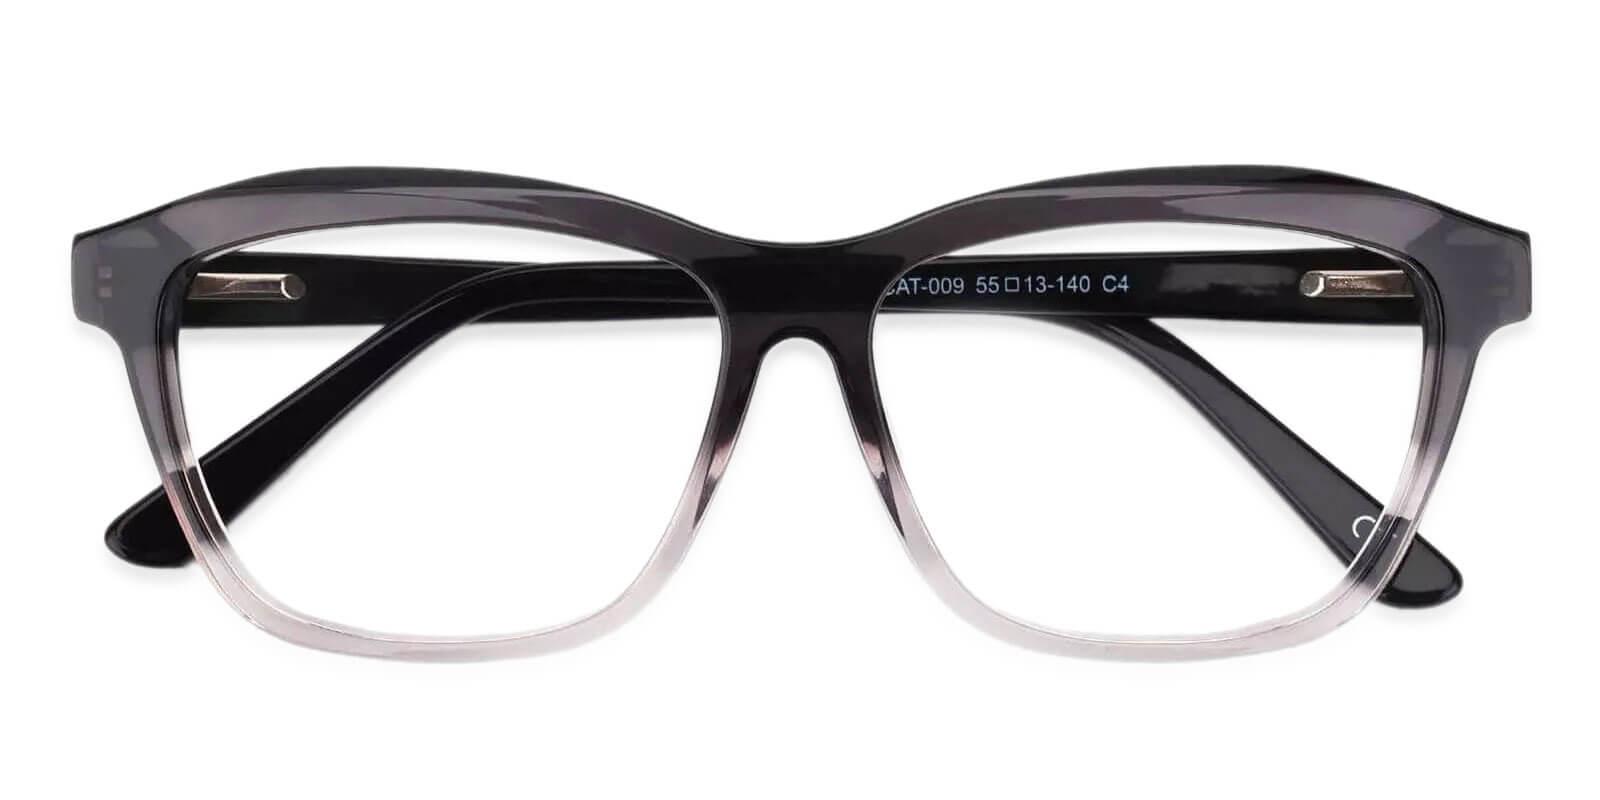 Sonia Translucent Acetate Eyeglasses , SpringHinges , UniversalBridgeFit Frames from ABBE Glasses